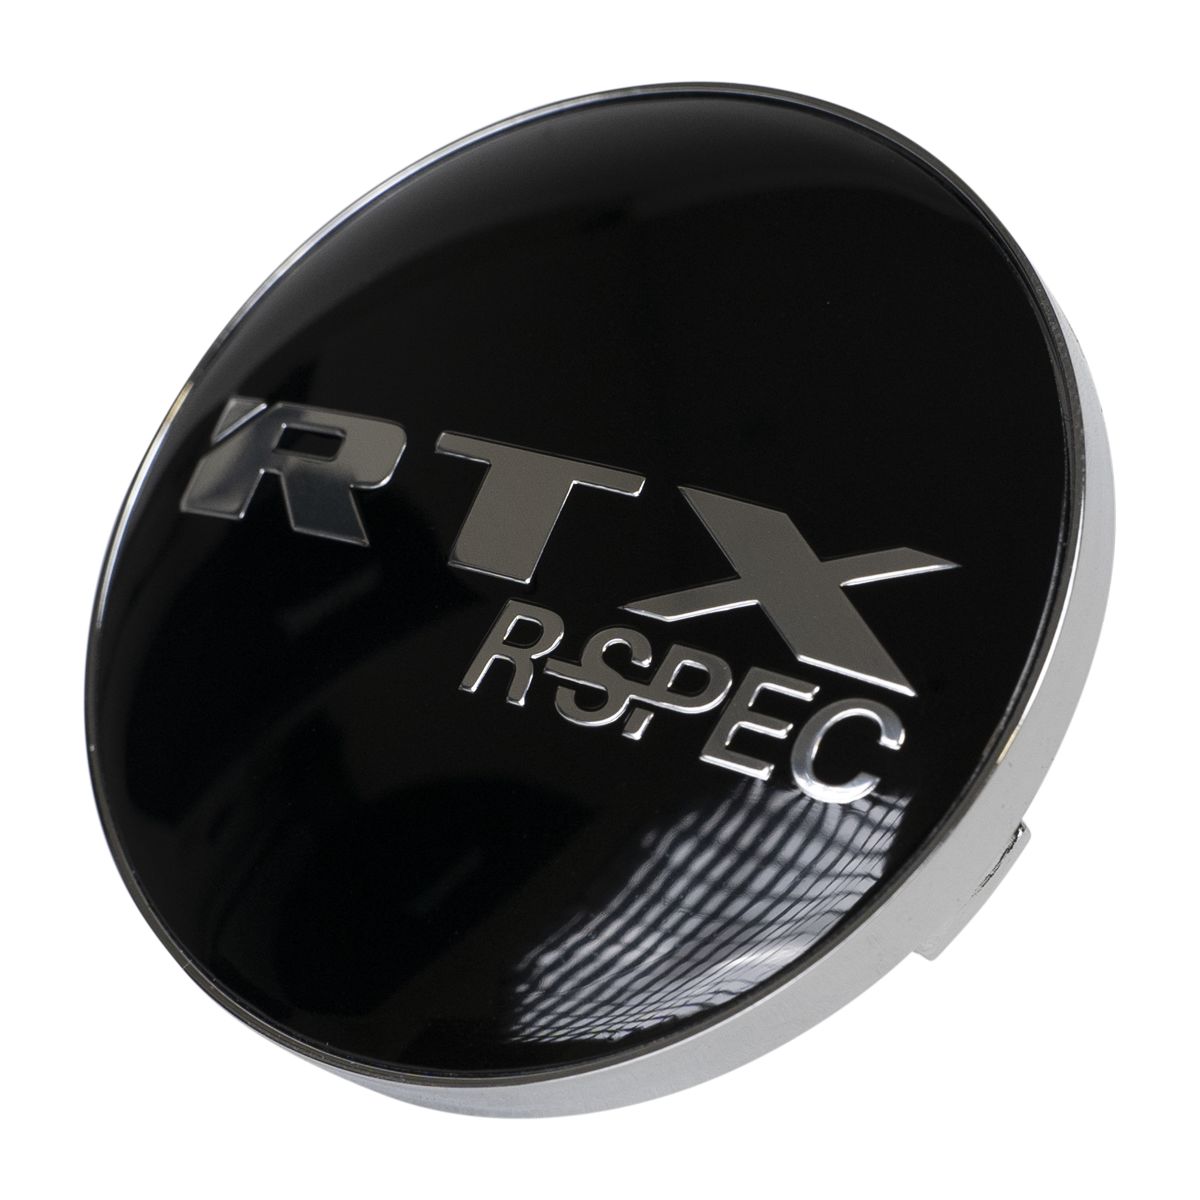 210K62ACRSCB - Center Cap Black RTX R-Spec Chrome with Black Background